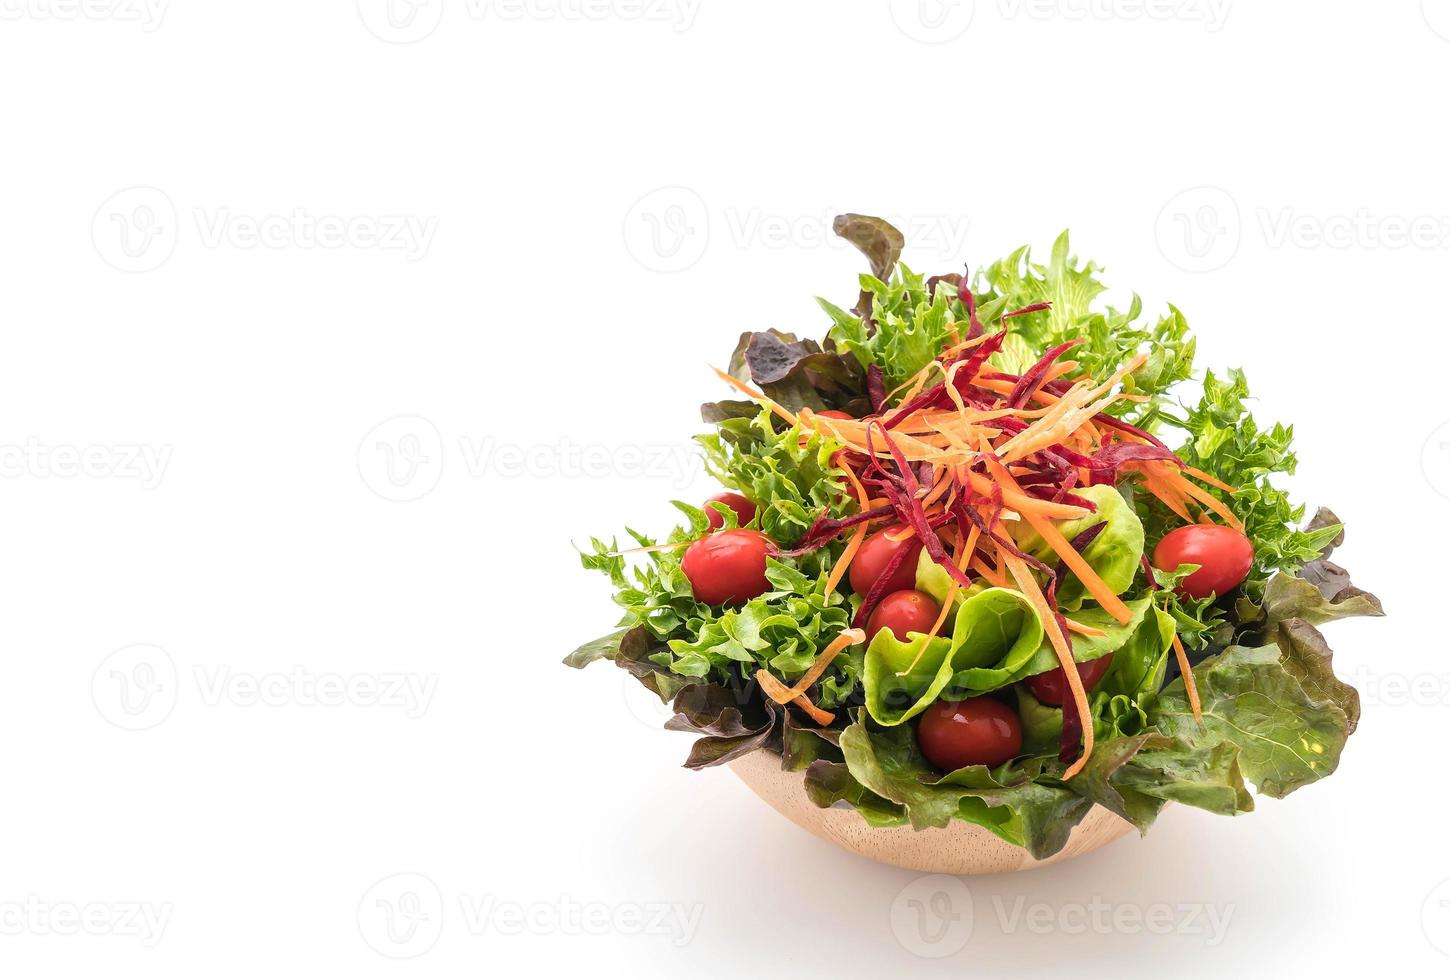 gemengde salade in houten kom op witte achtergrond foto